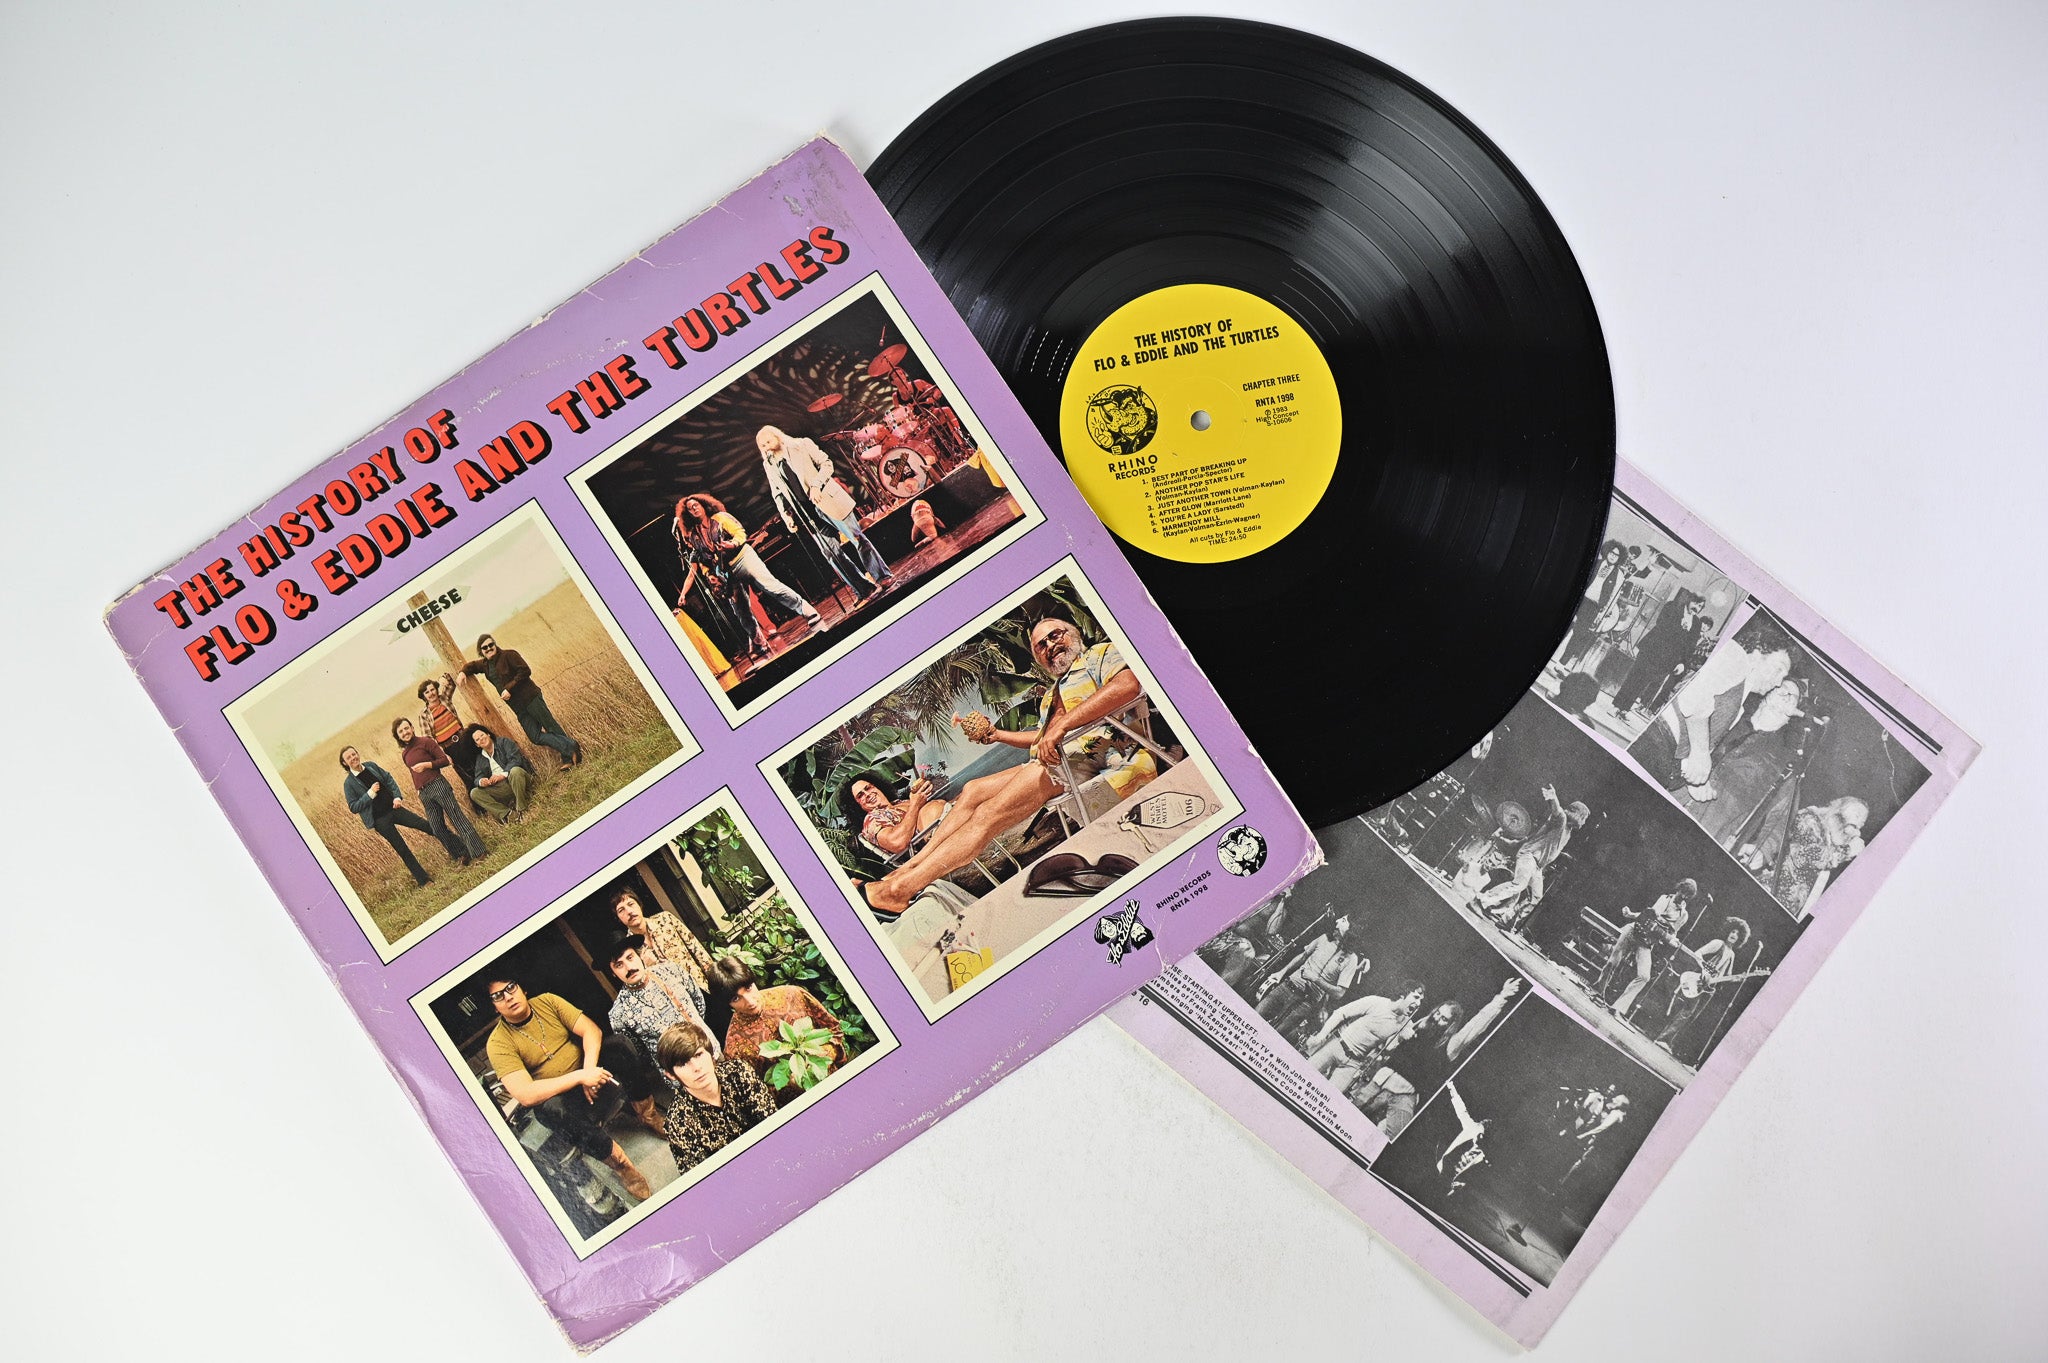 Flo & Eddie - The History Of Flo & Eddie And The Turtles on Rhino Records